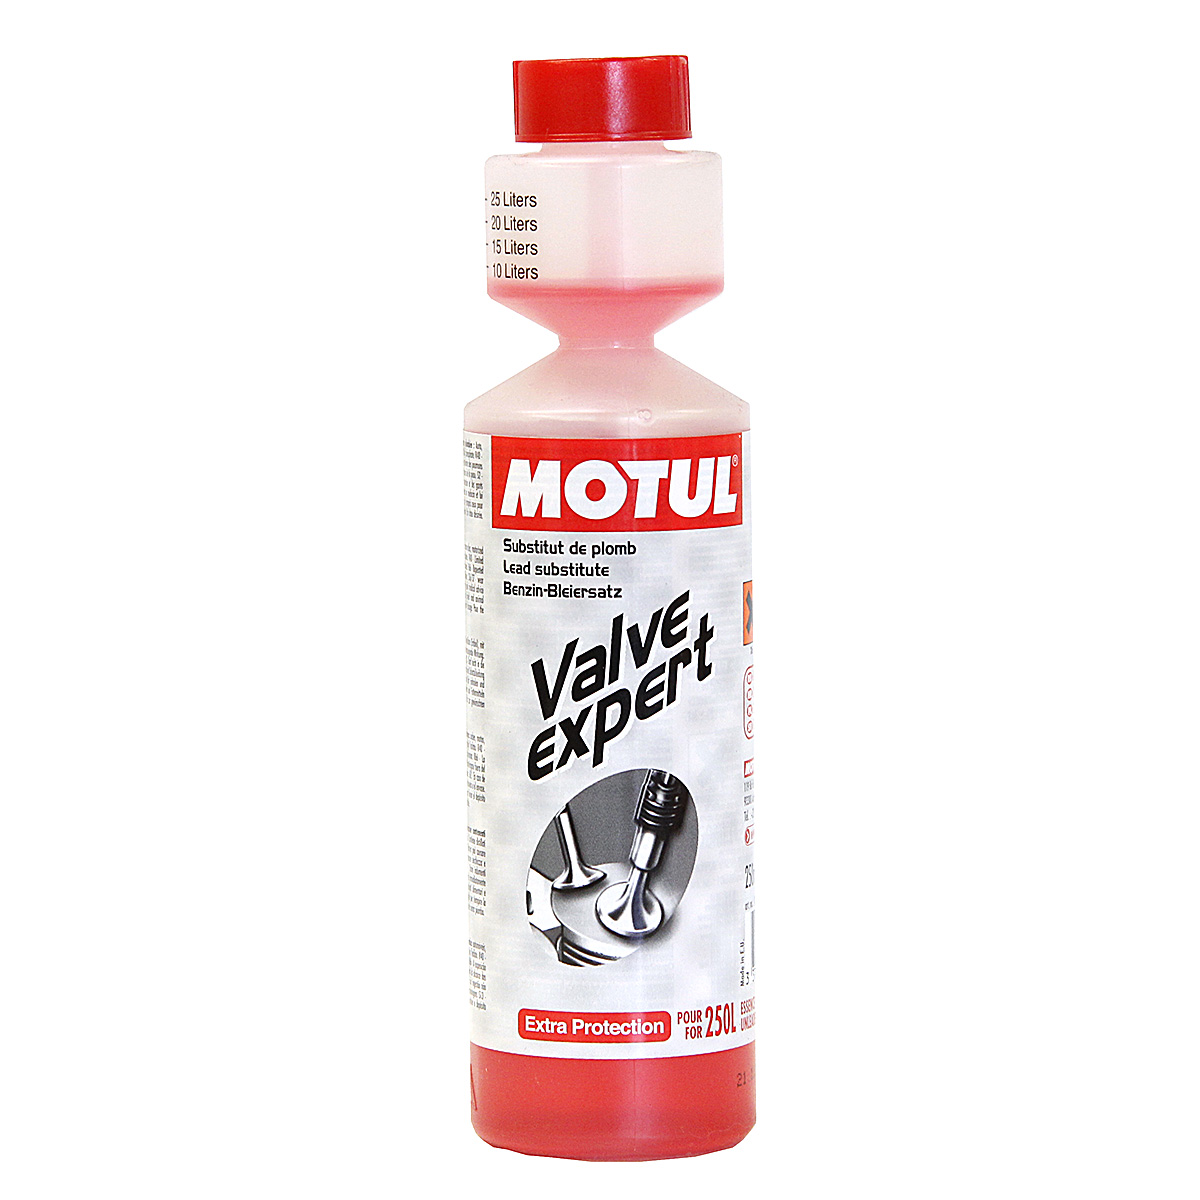 Motul Valve Expert - Lead Substitute (250 ml)